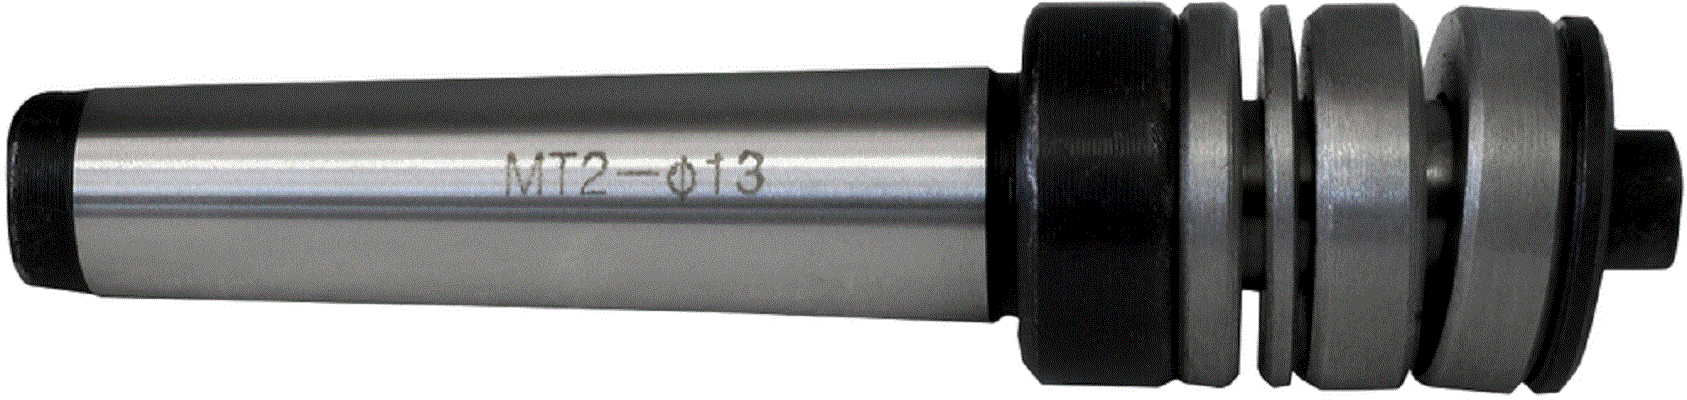 Оправка шпинделя Мк-2/13 мм JET 50000038 Зажимные оправки для станков